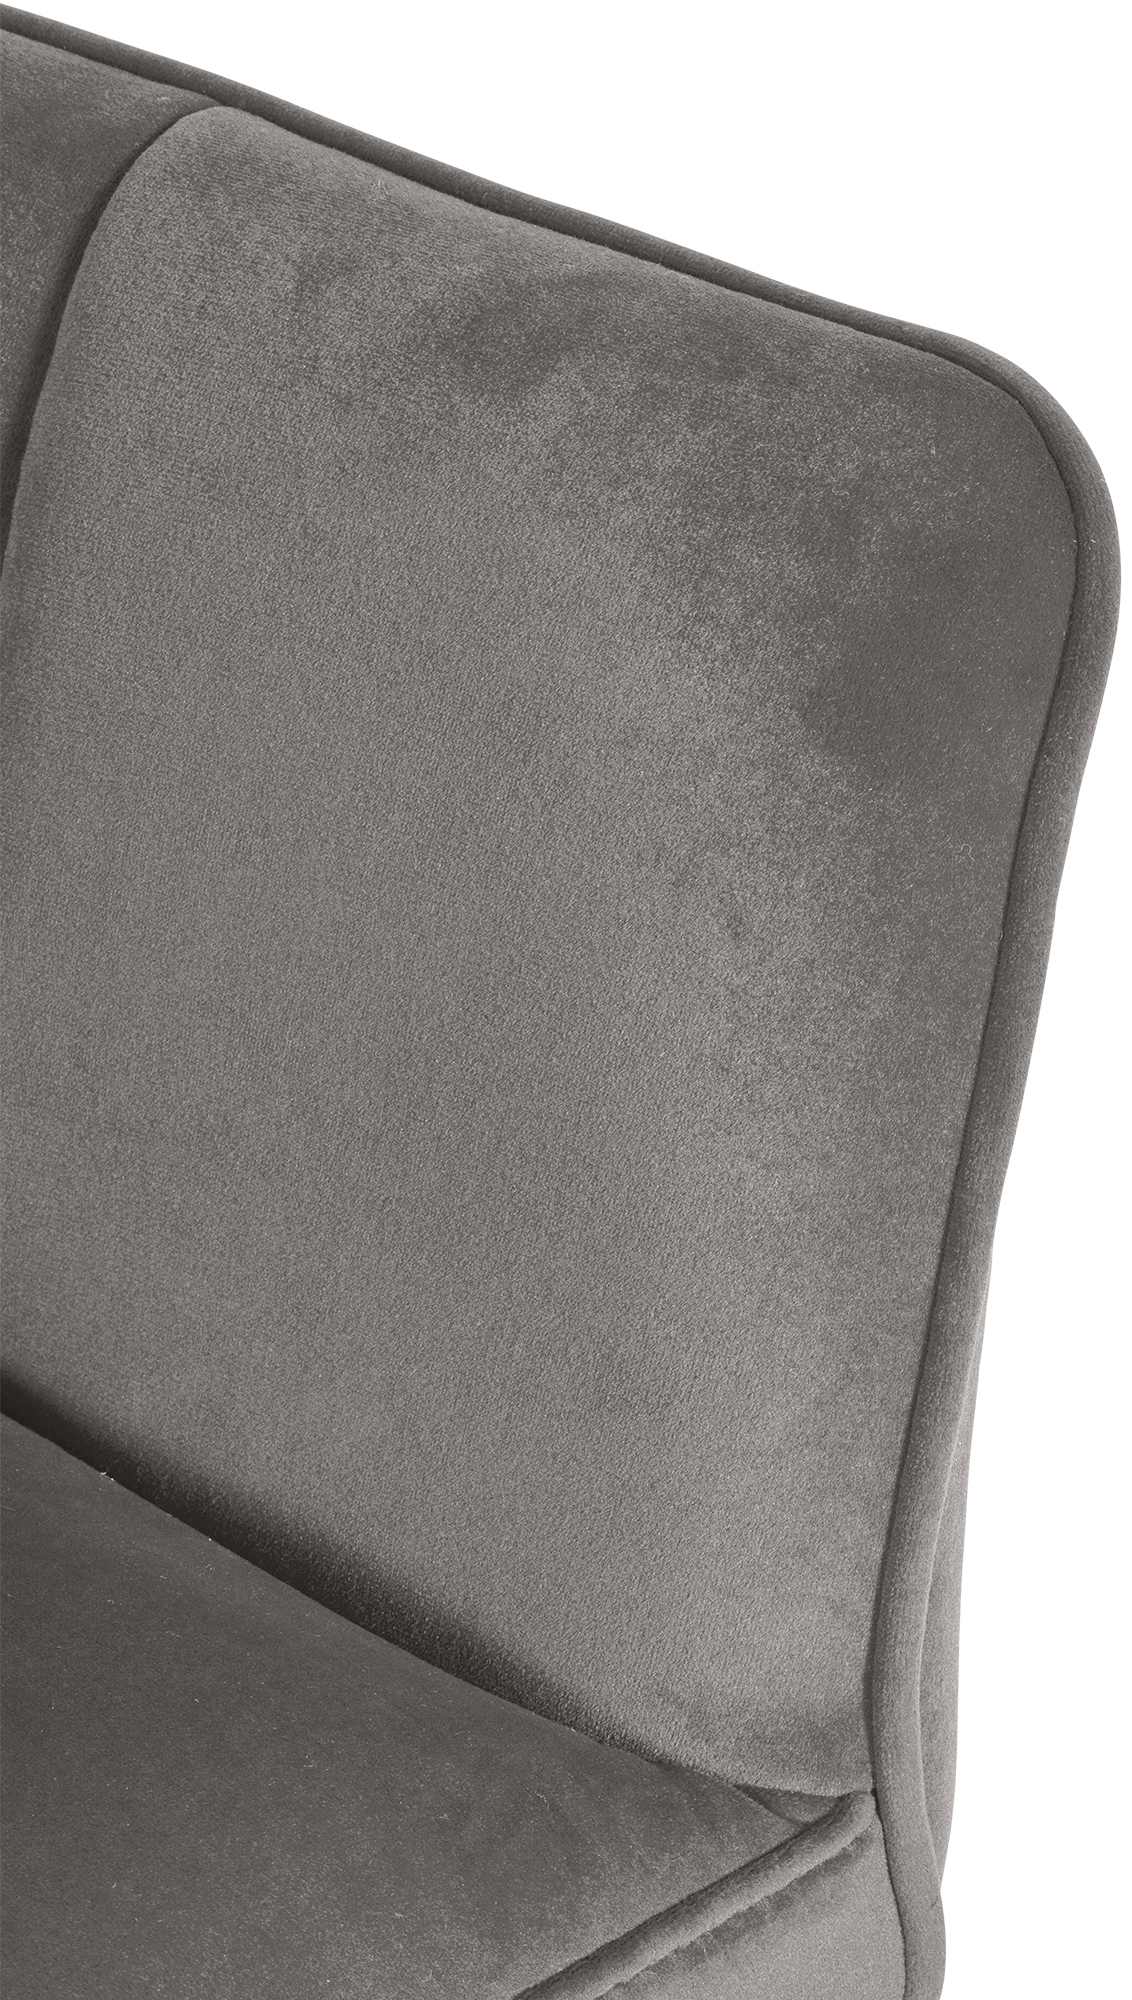 2er Set Barhocker Damaso Samt-Bezug mit Vierfußgestell Metall matt weiss grau